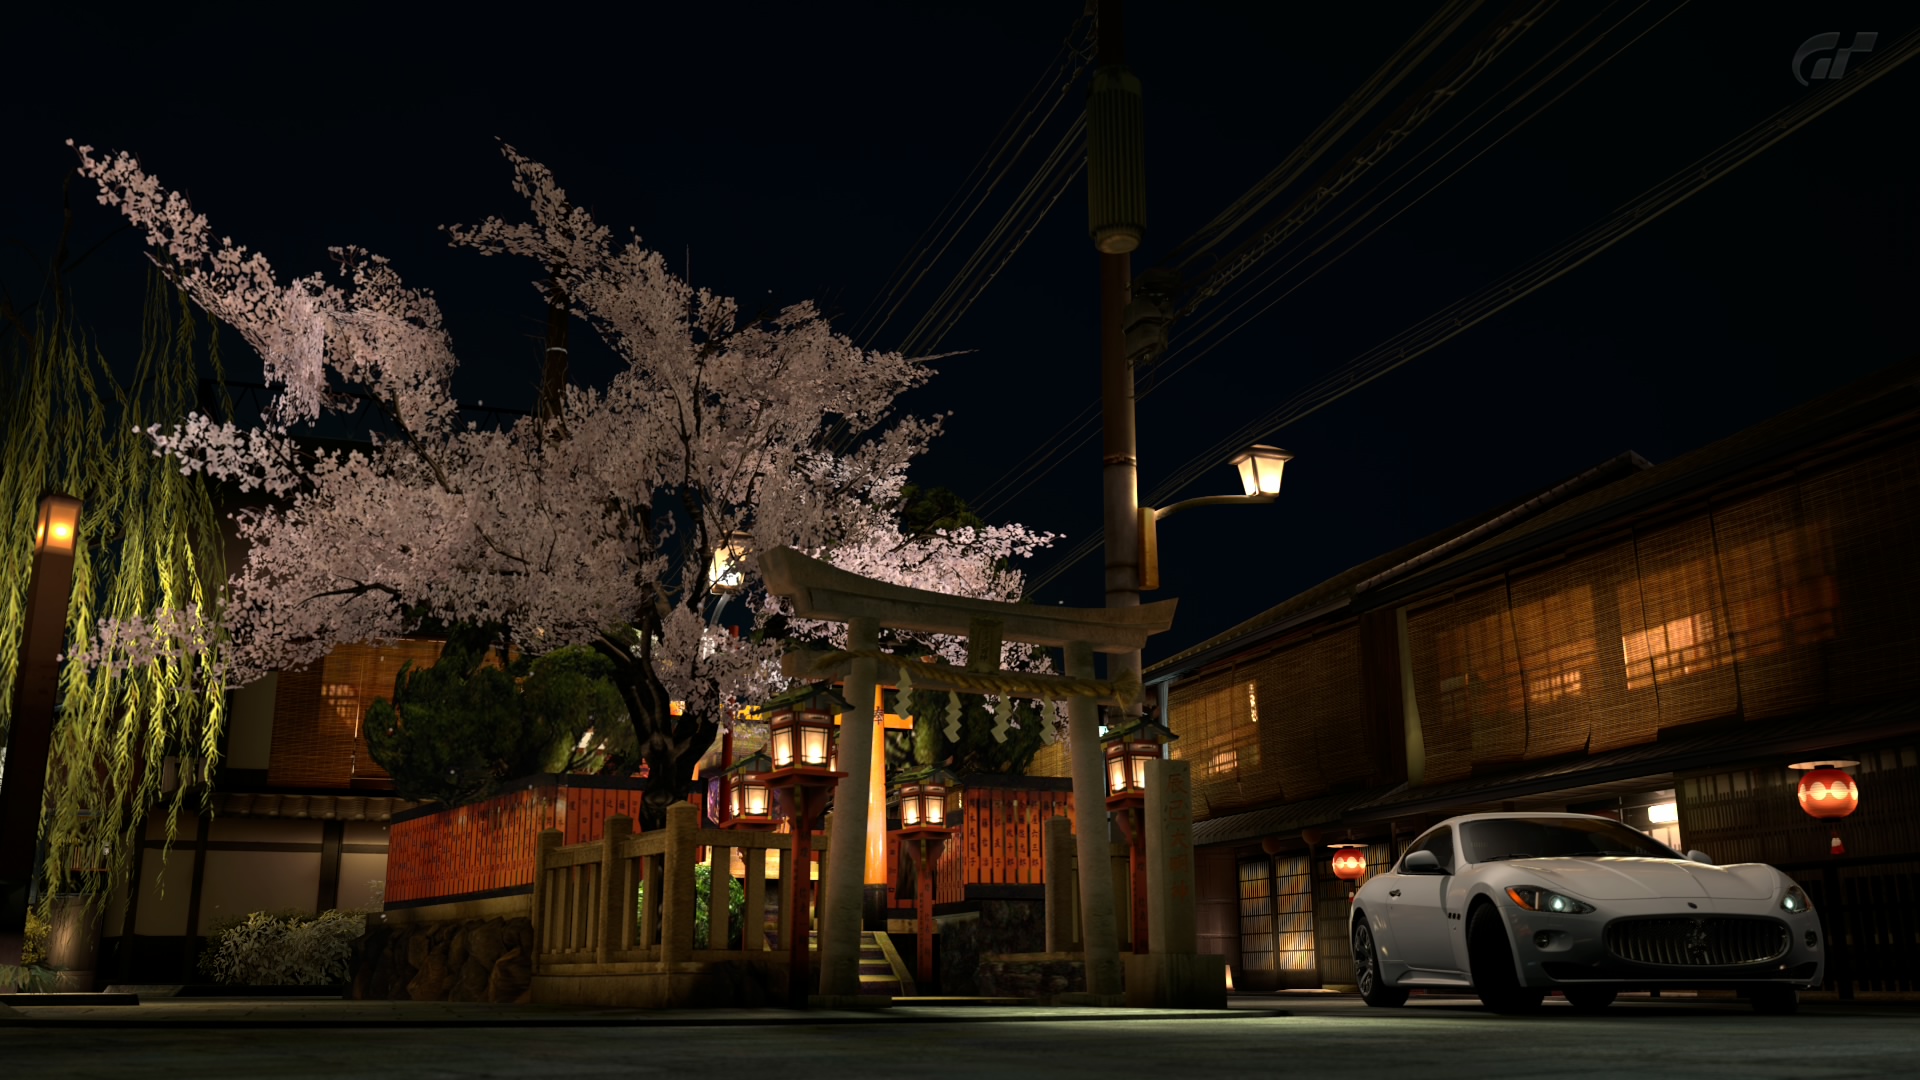 Gran Turismo 4 Randomizer - 9 Hours In Tsukuba With A Ford Ka (New PC  Celebration!) 